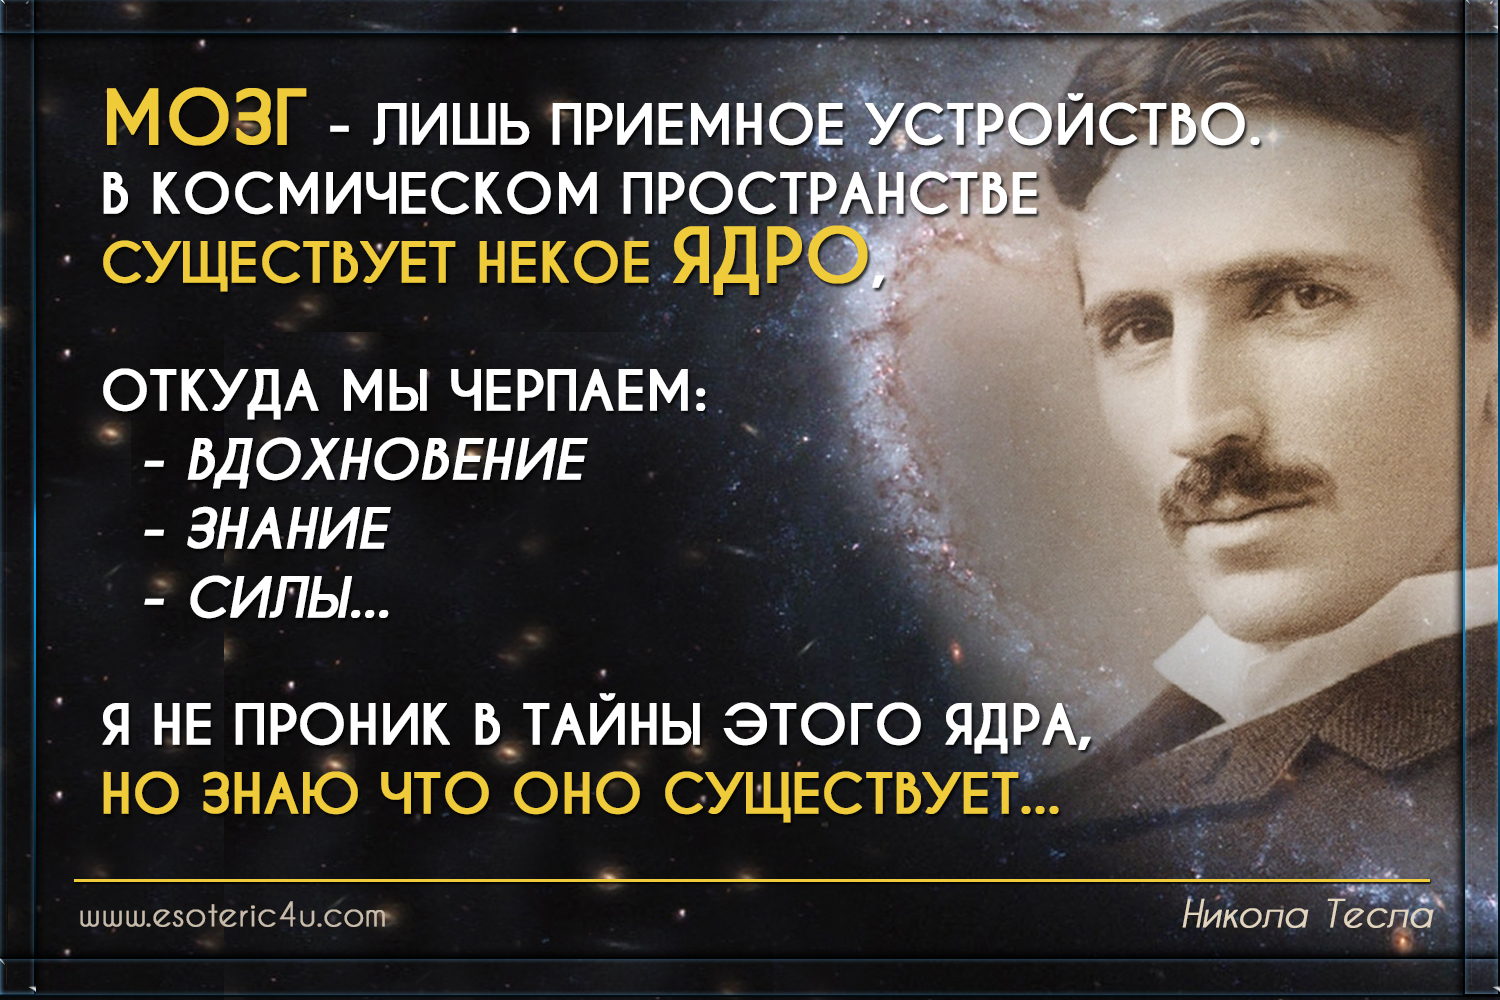 Nikola_Tesla_citate_energy_mozg_priemnoe_ustroistvo.jpg - 933.11 kB